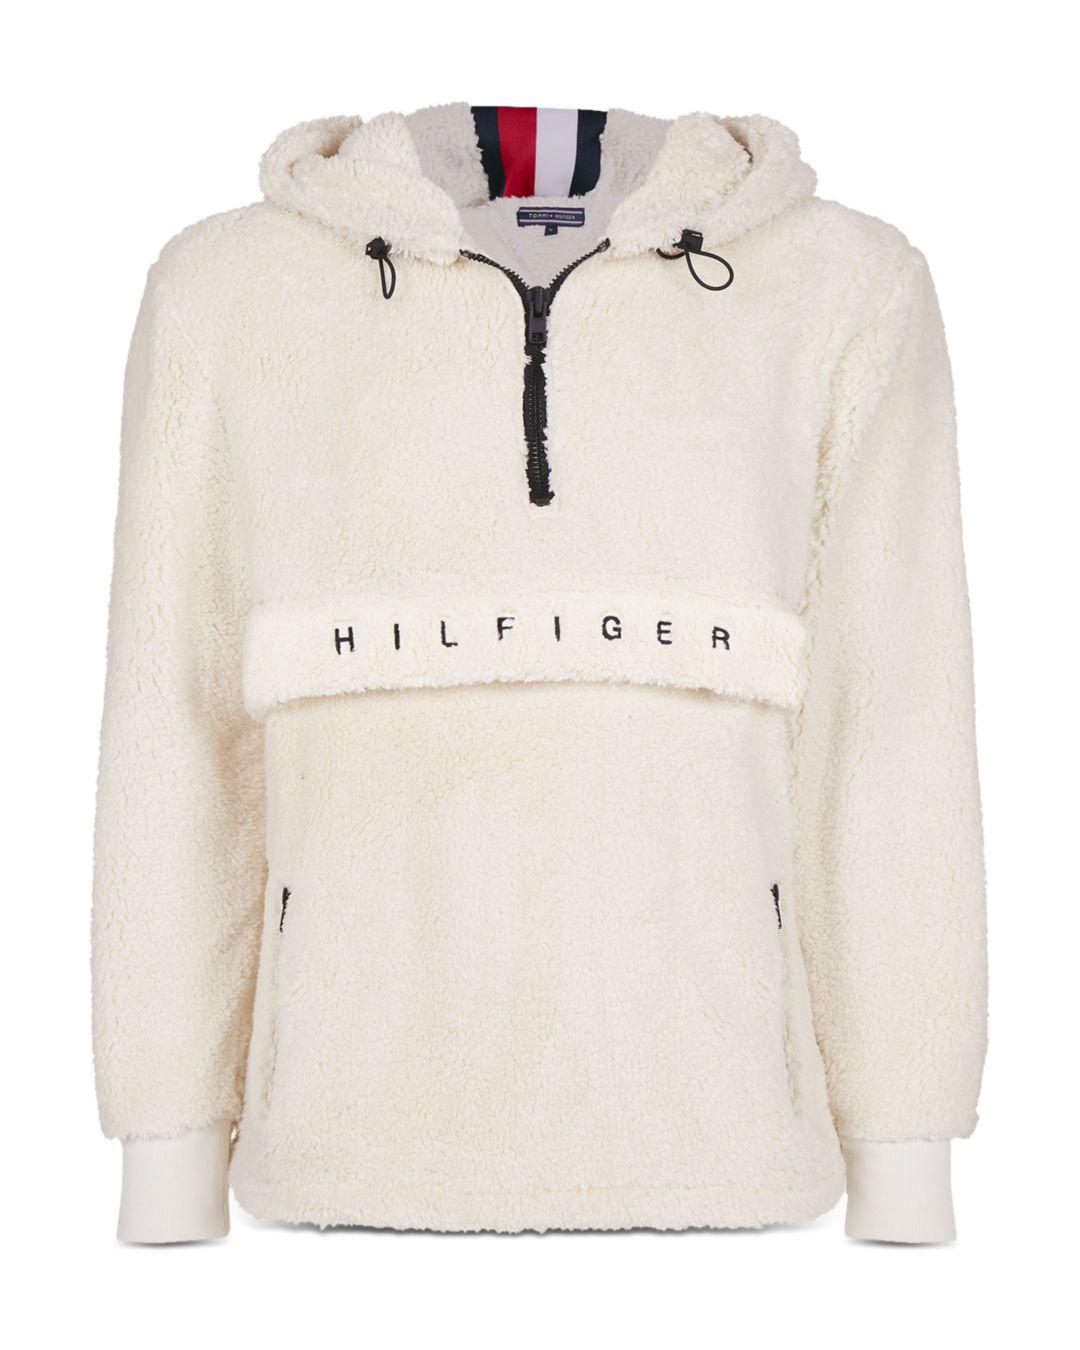 Tommy Hilfiger Oversized Hooded Sherpa Sweatshirt in White for Men - Lyst